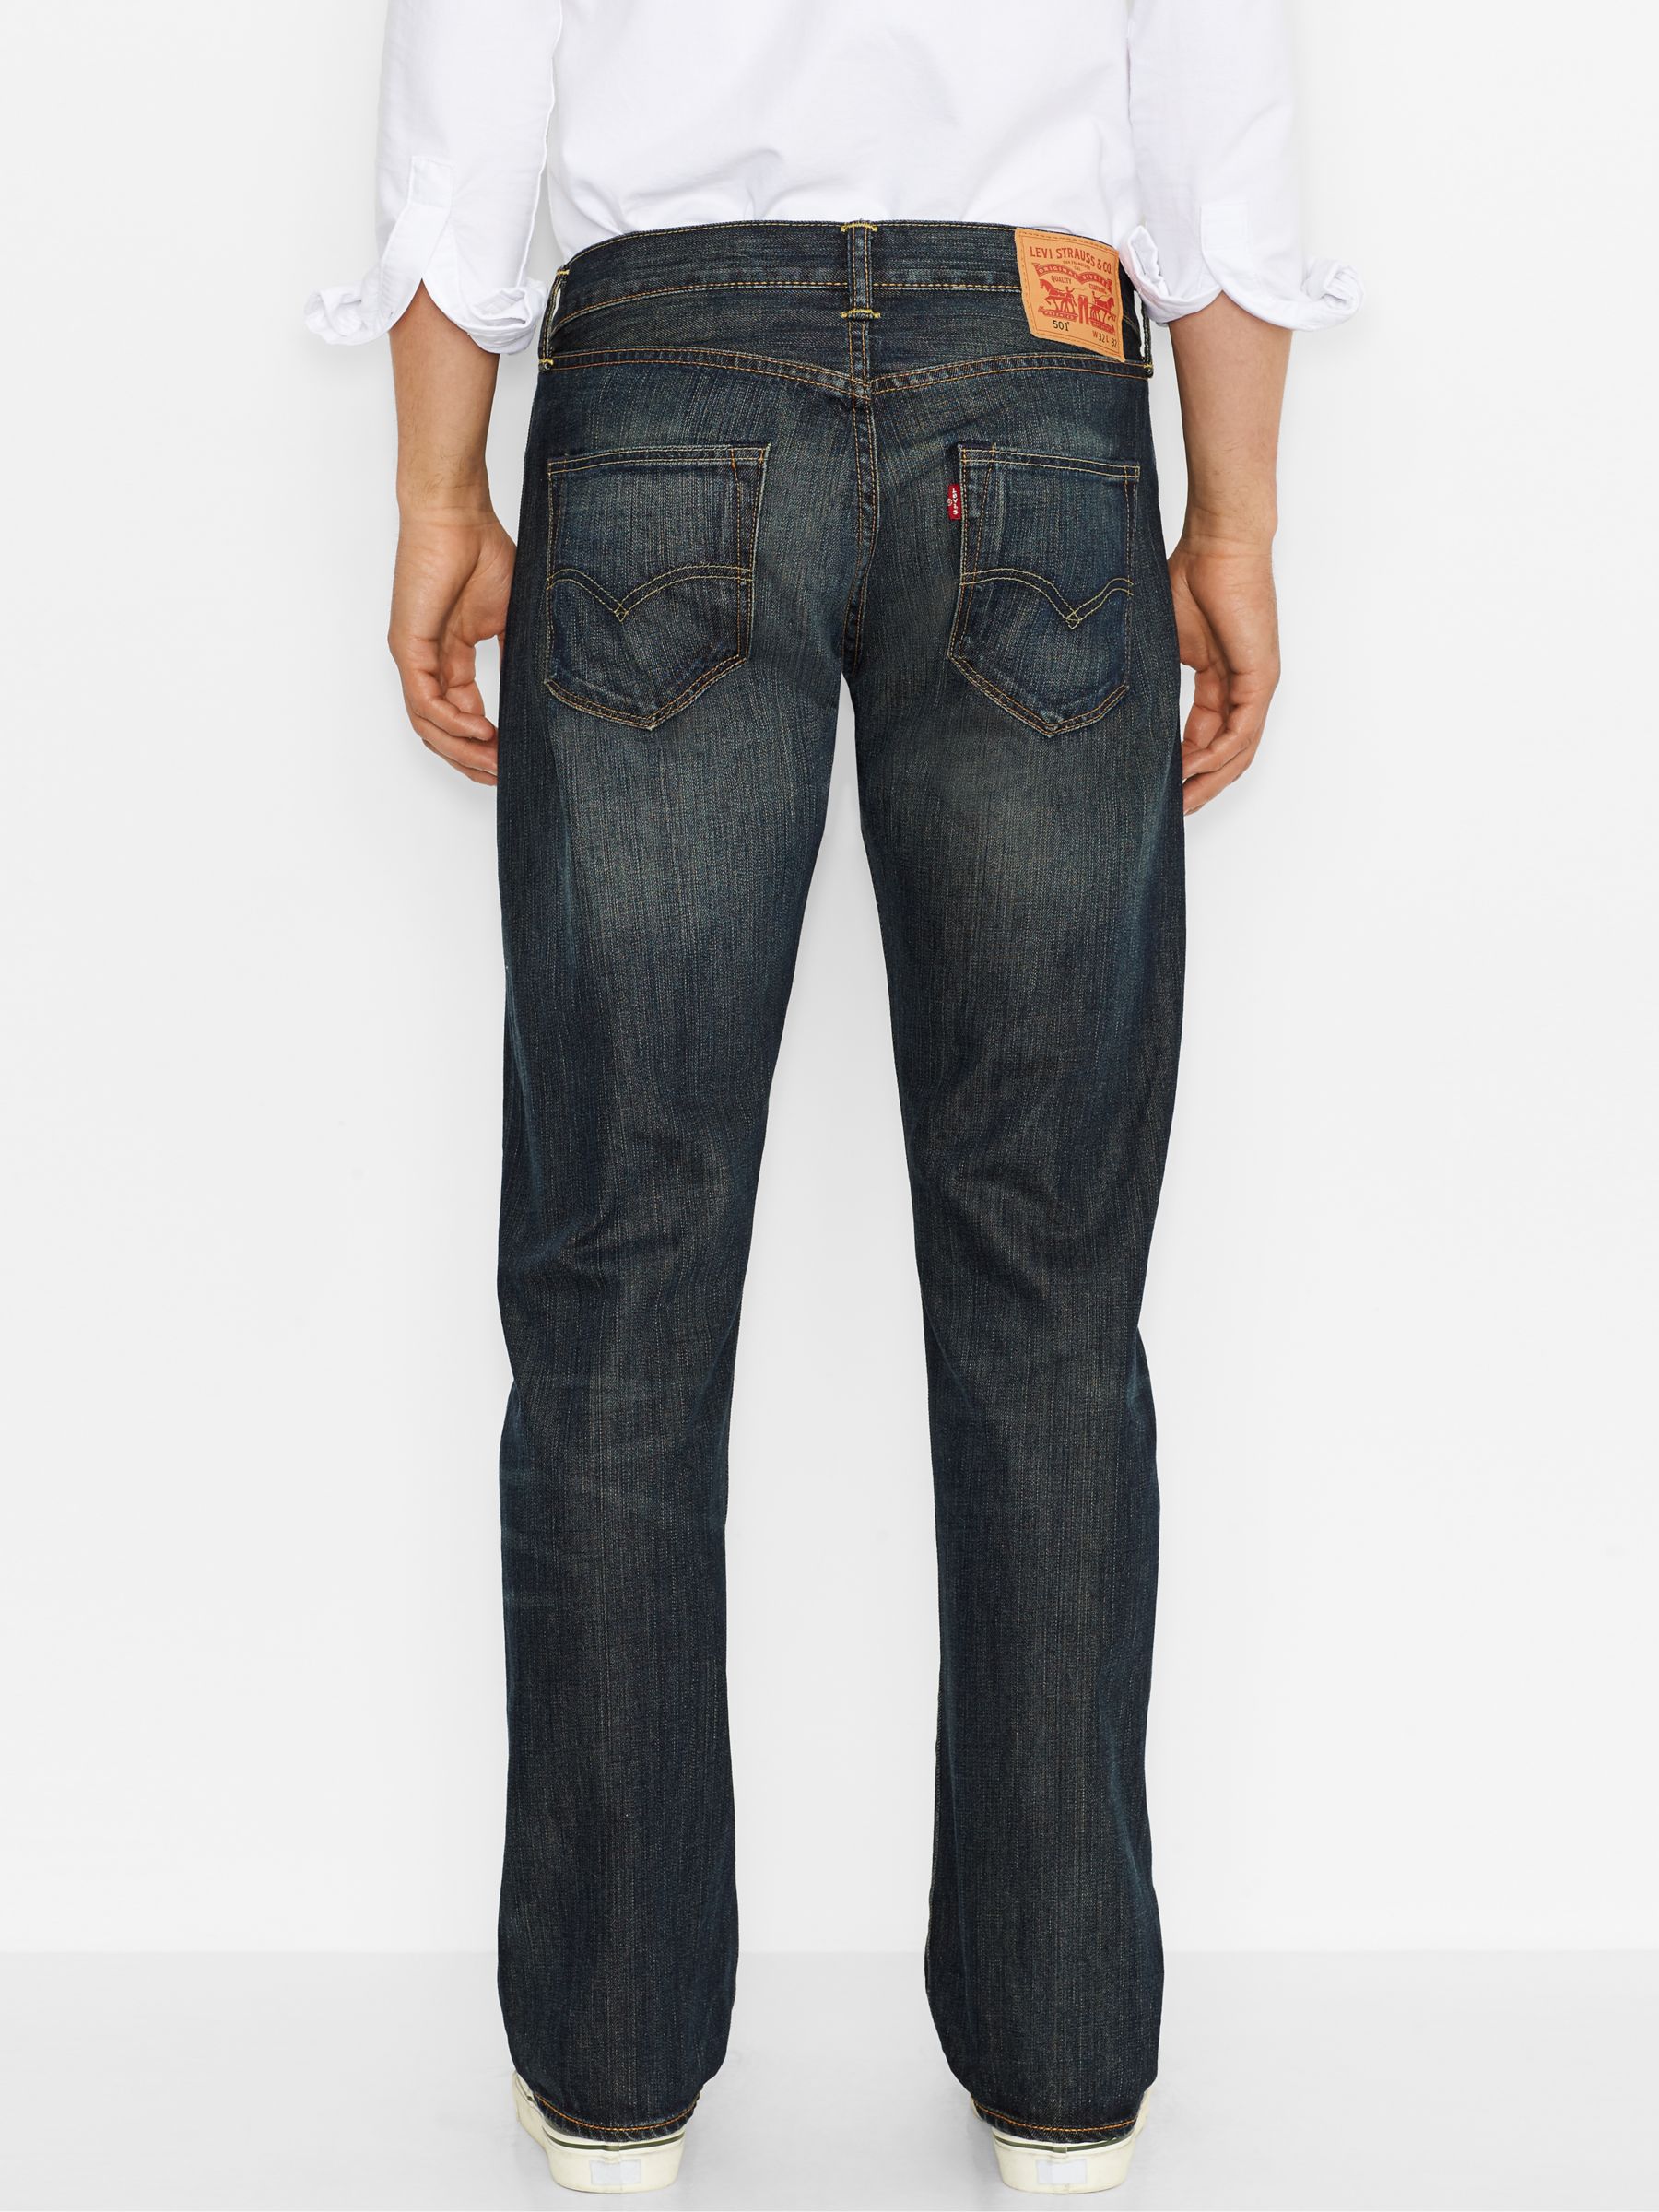 levis dusty black jeans 501